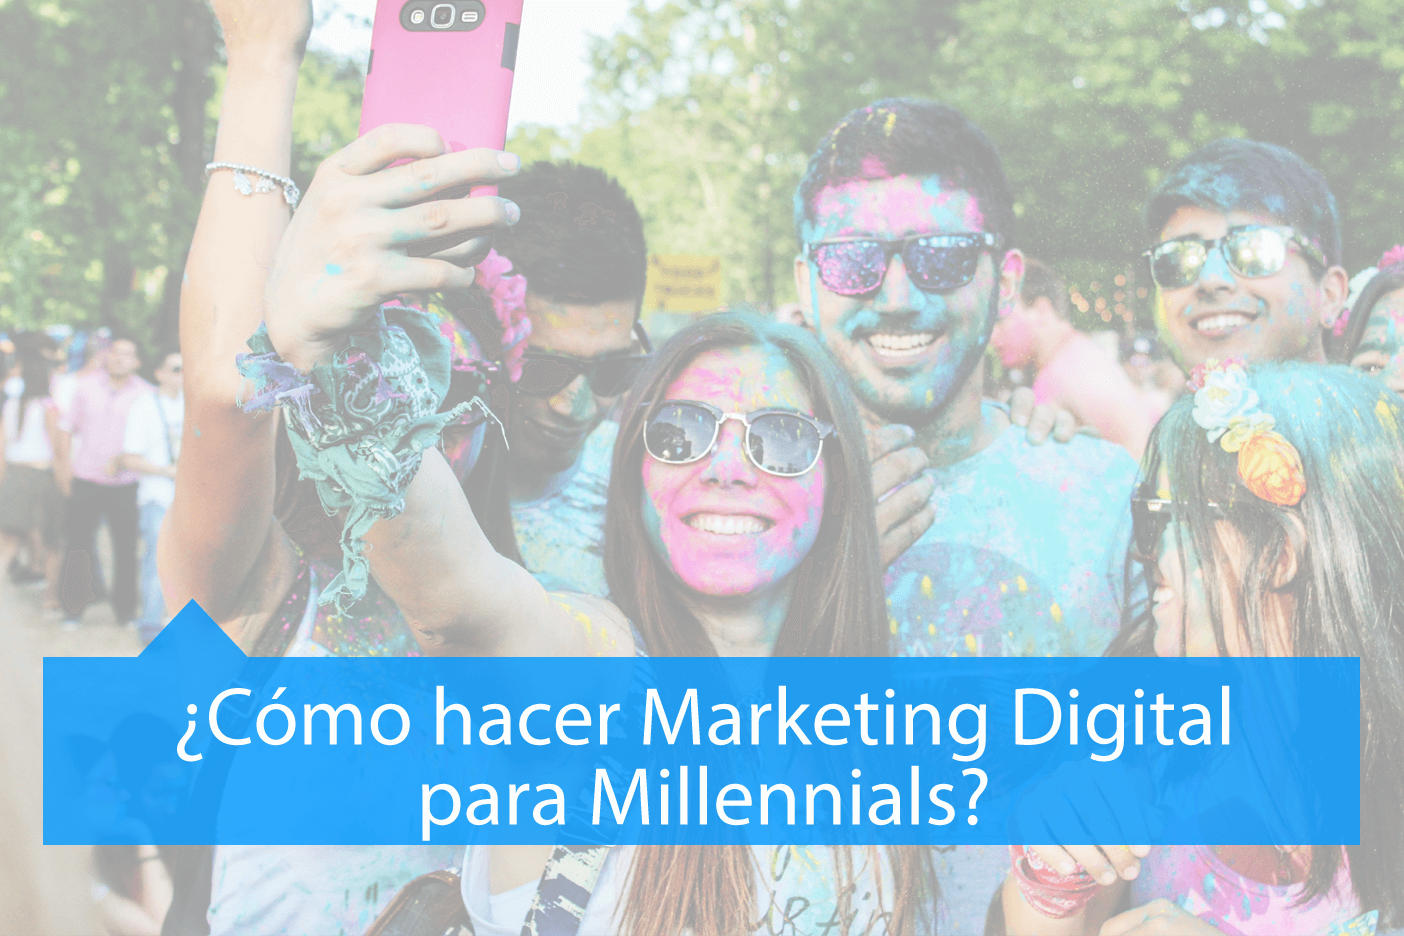 Marketing Digital para Millennials